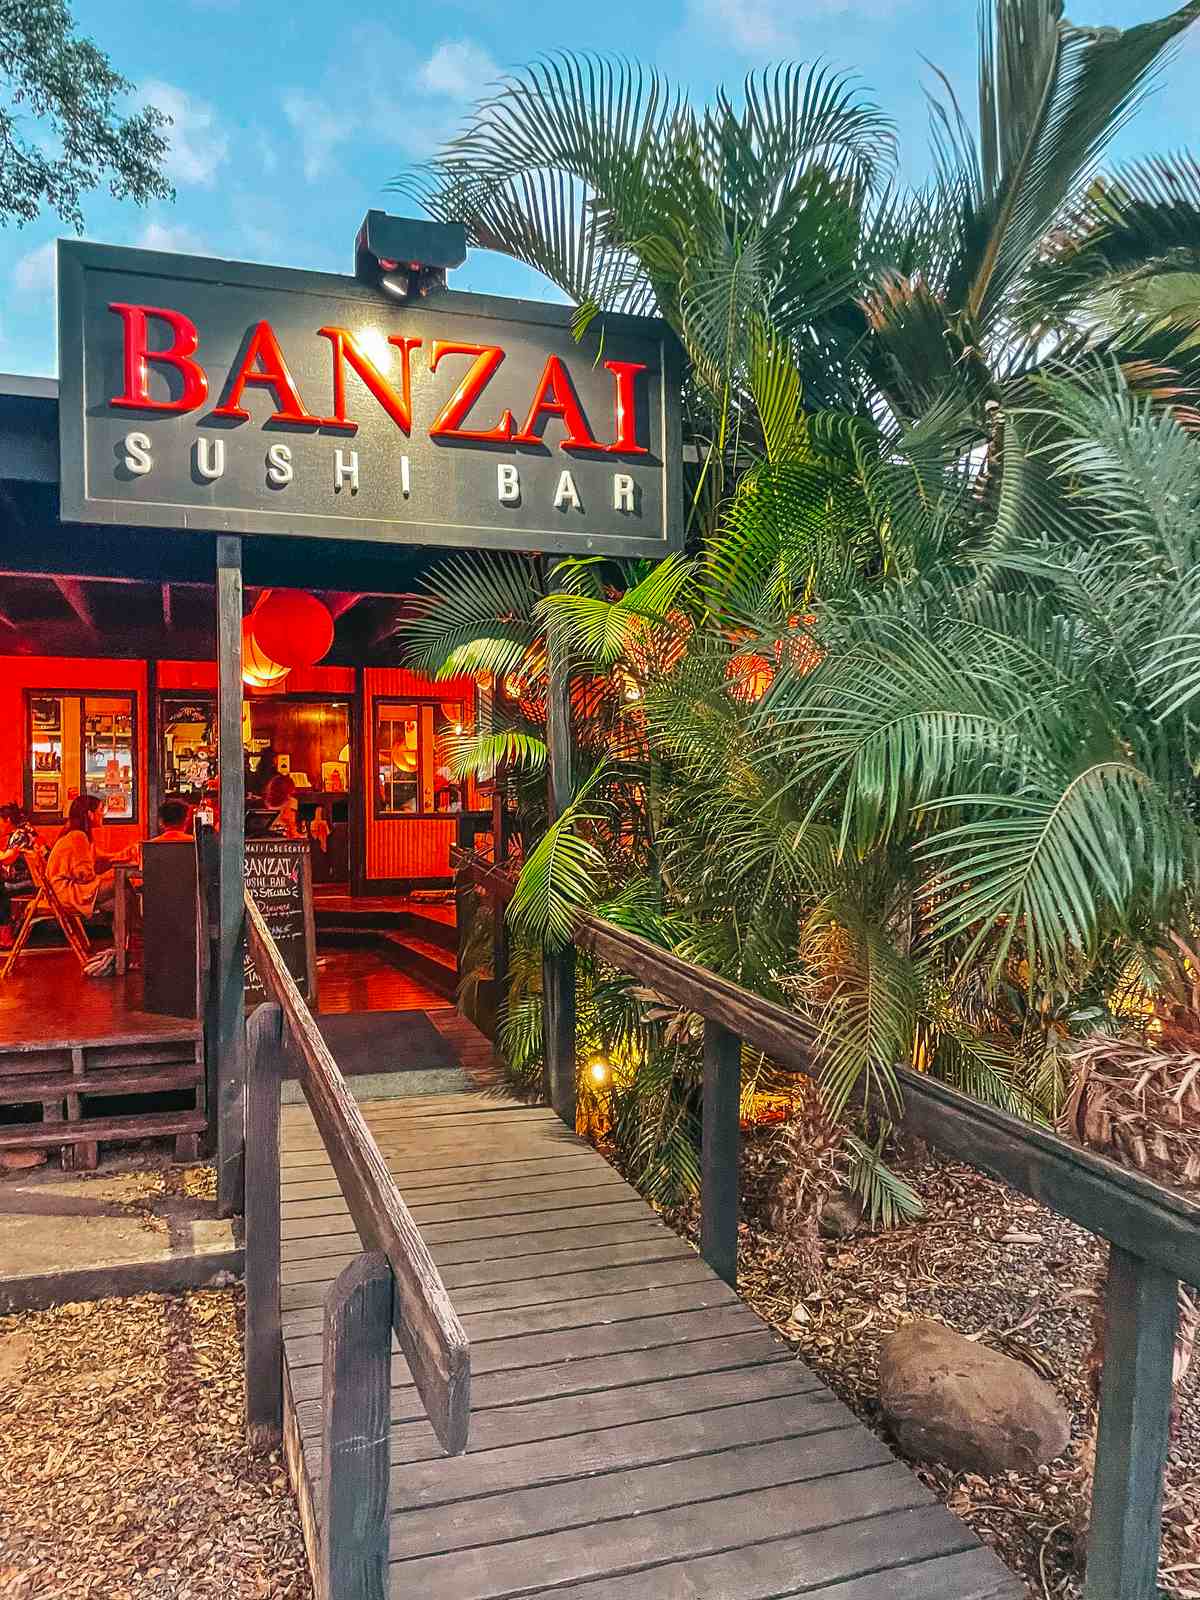 Banzai Sushi Bar restaurant on Oahu's North Shore